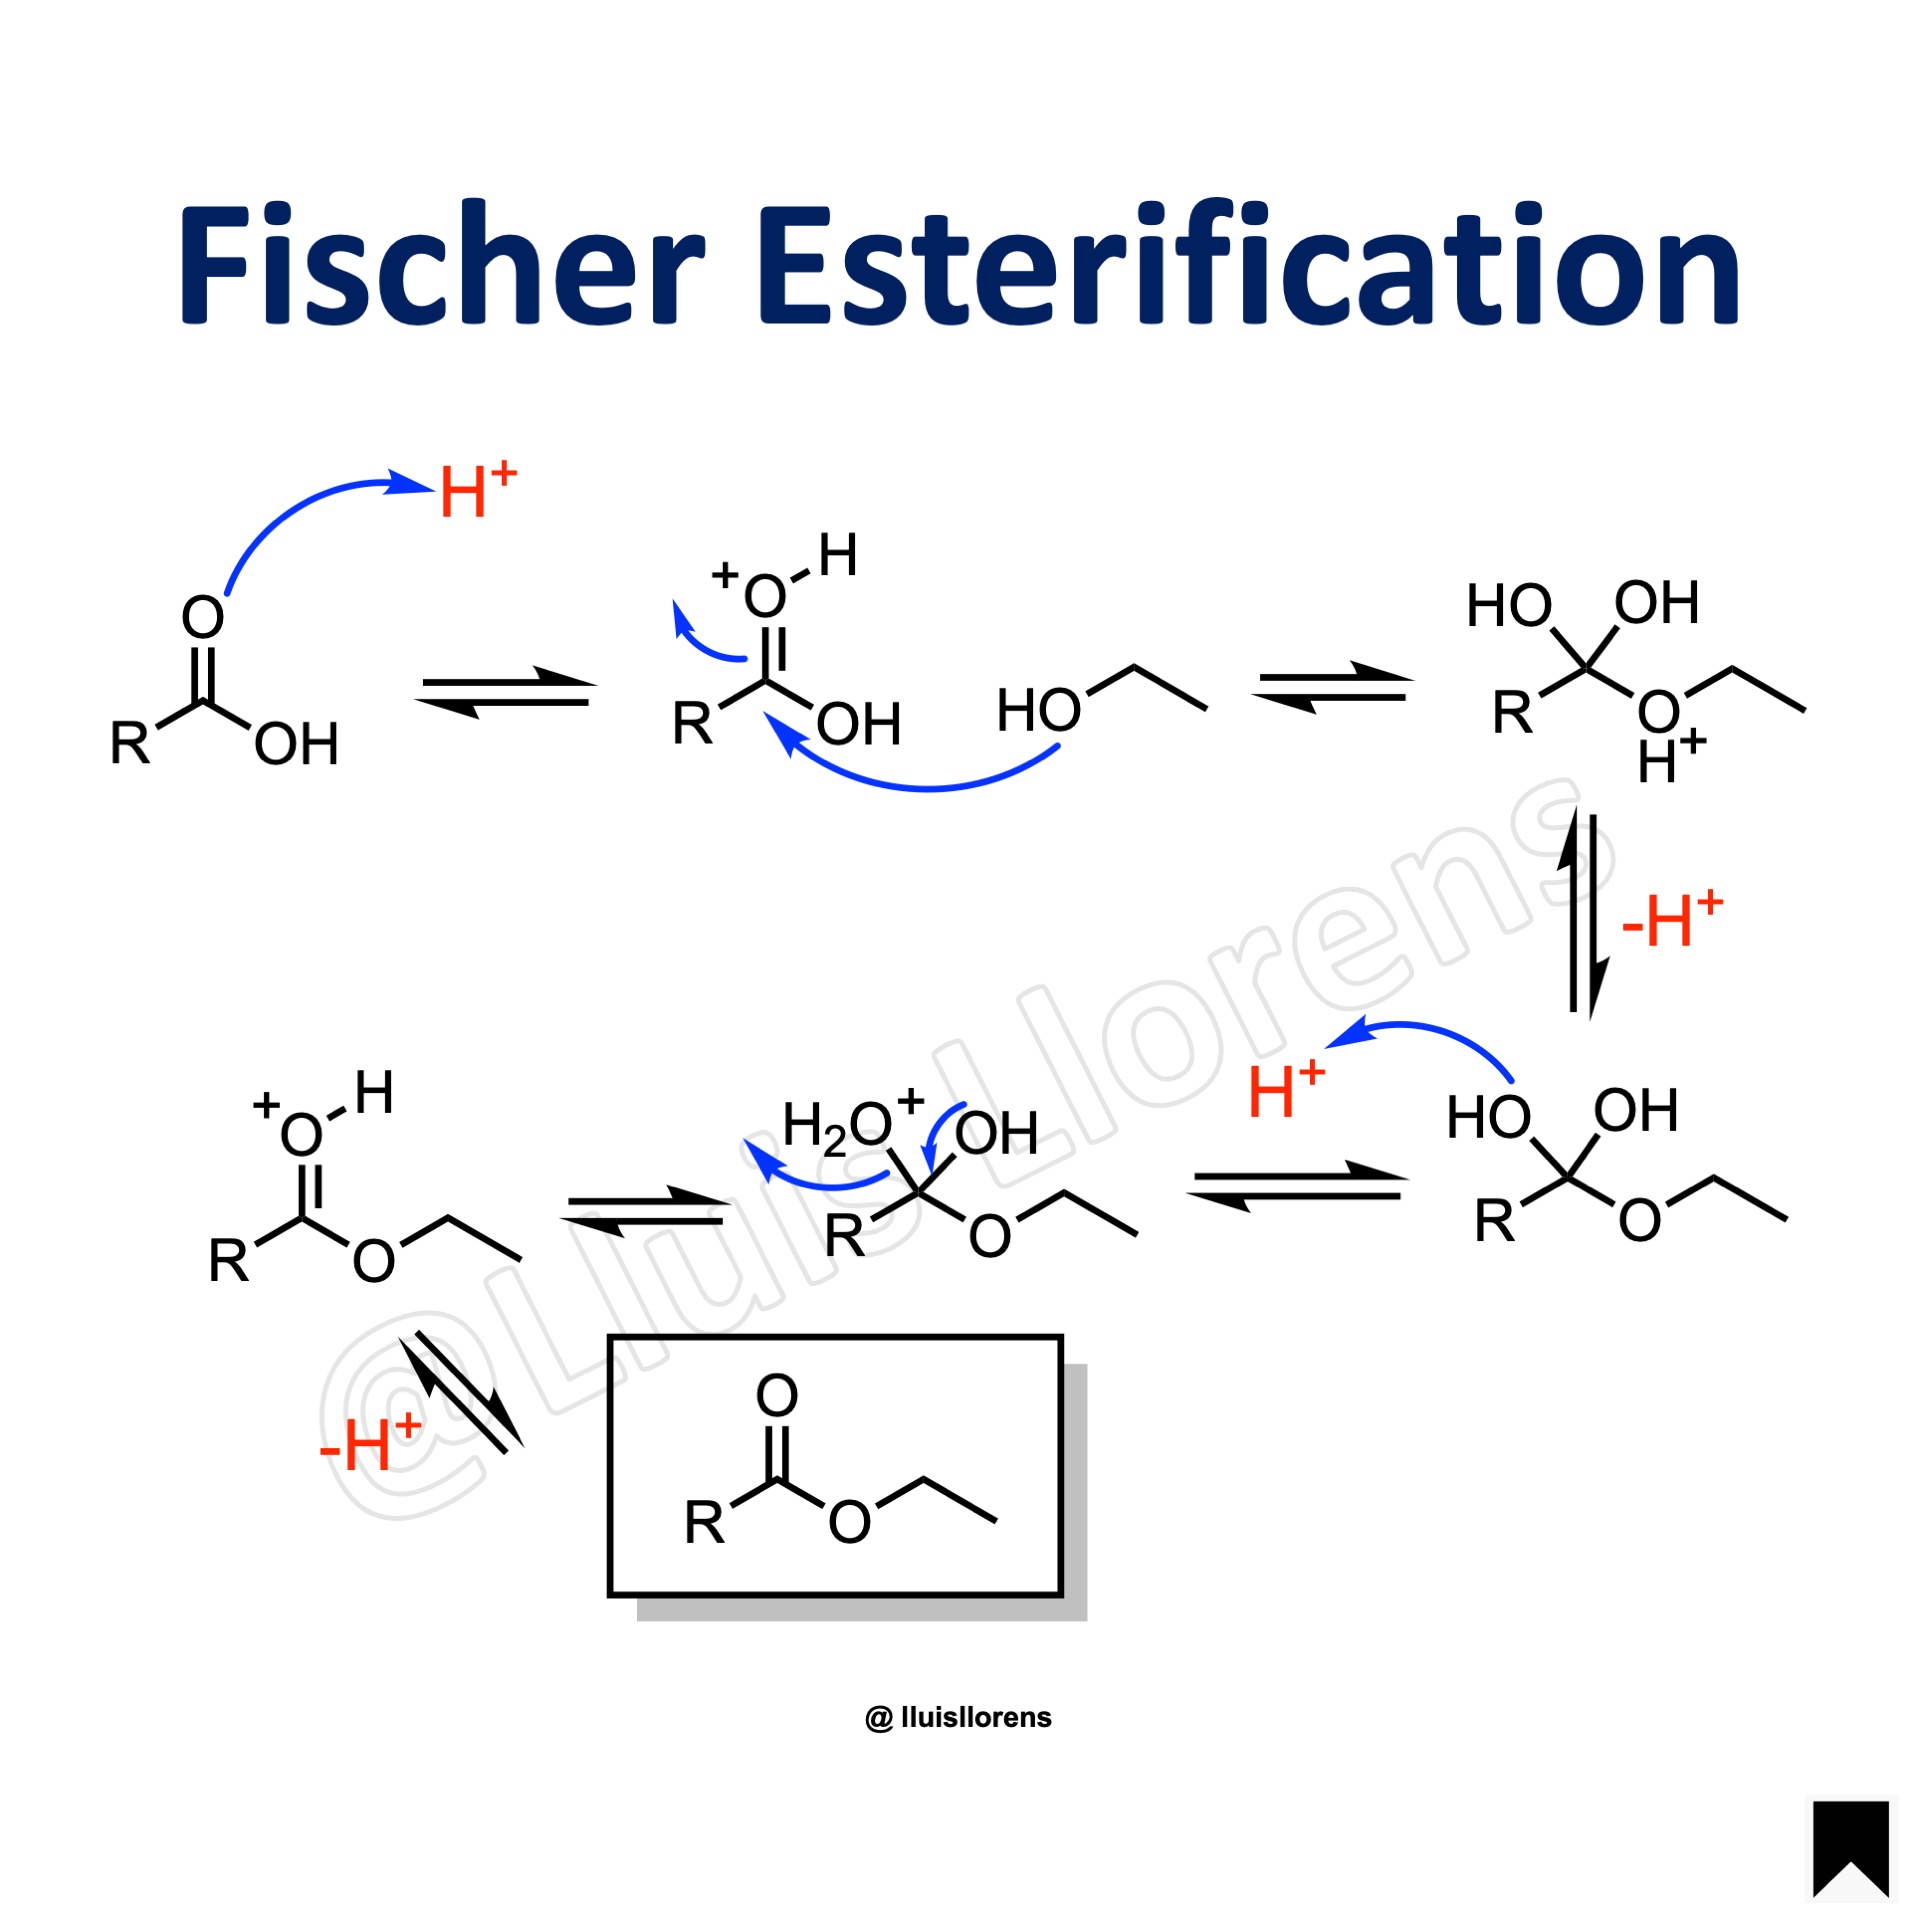 transesterification mechanism